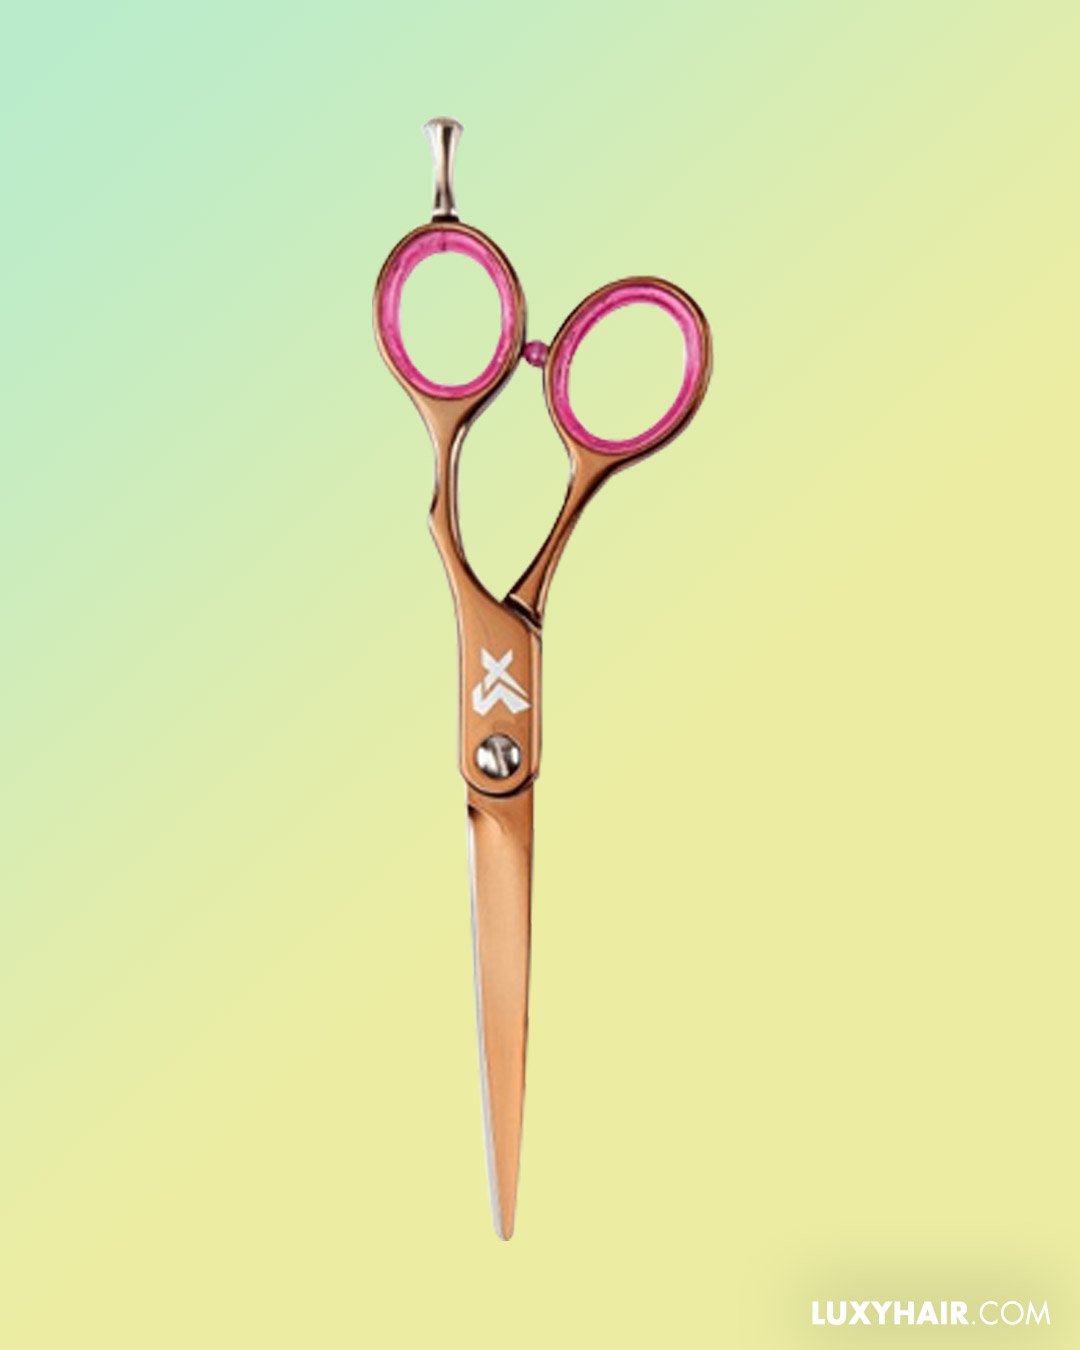 Best hair scissors